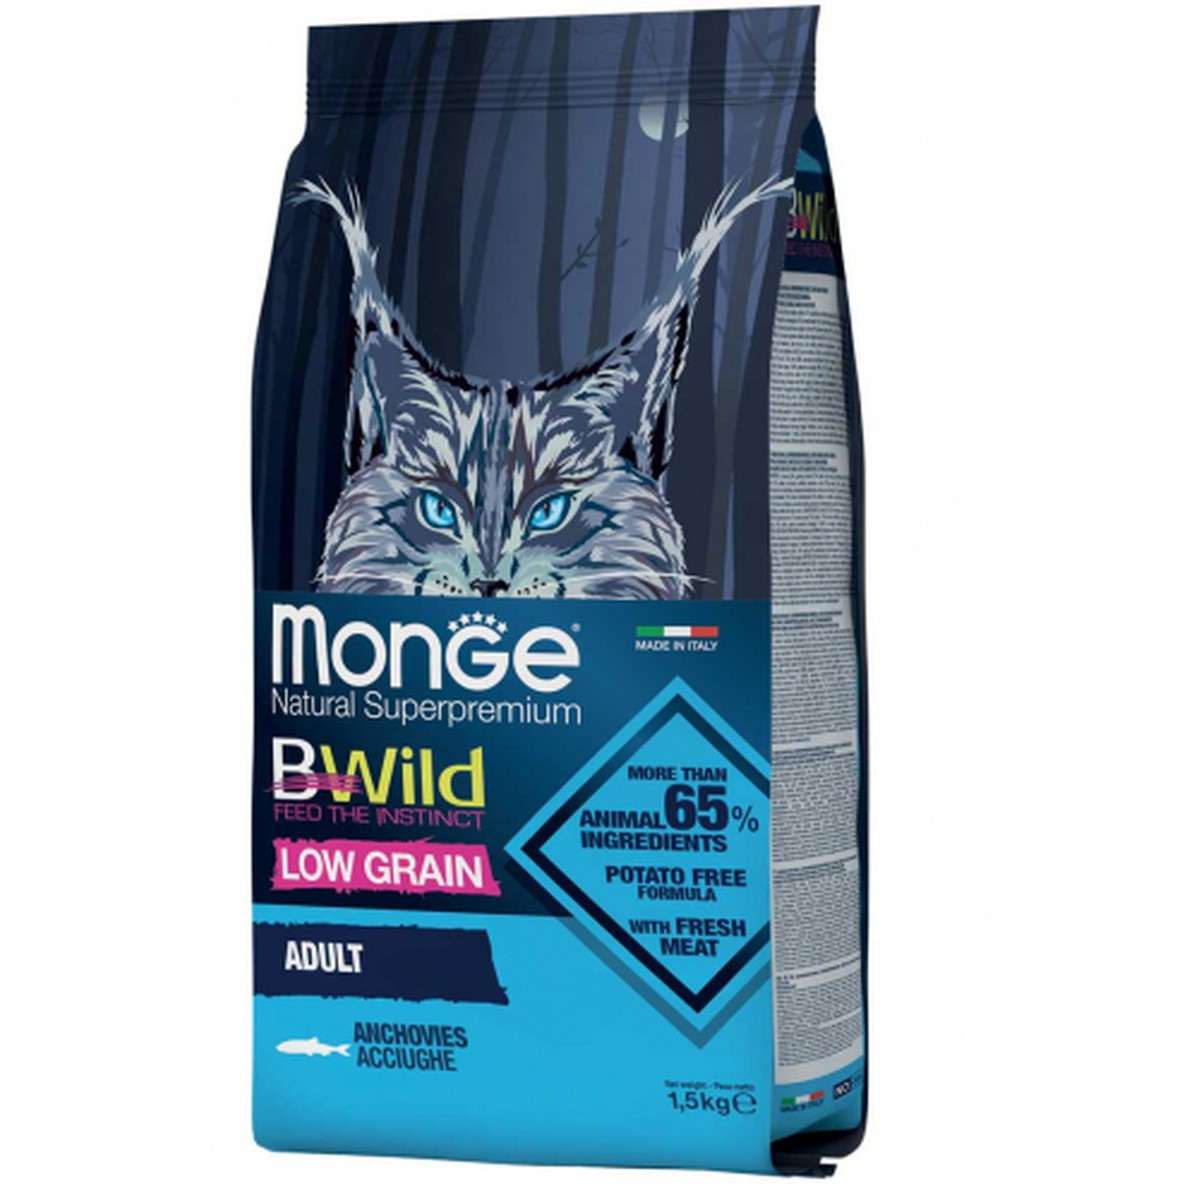 Monge  Monge Cat BWild LG Adult Anchovies 1,5kg  